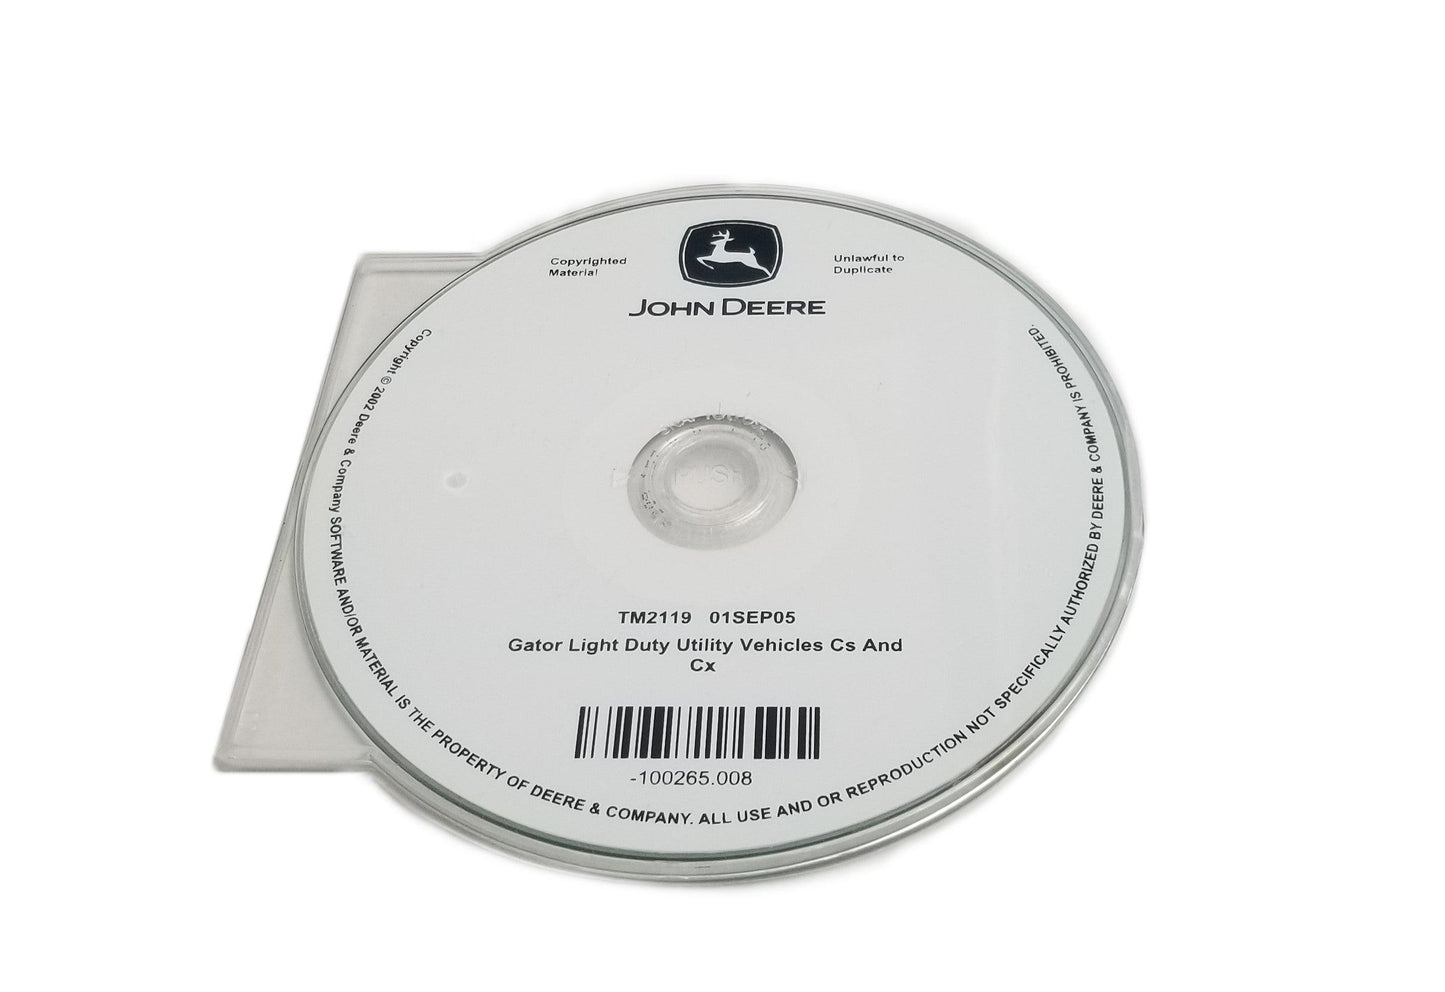 John Deere CS/CX Gator Utility Vehicle Technical CD Manual - TM2119CD